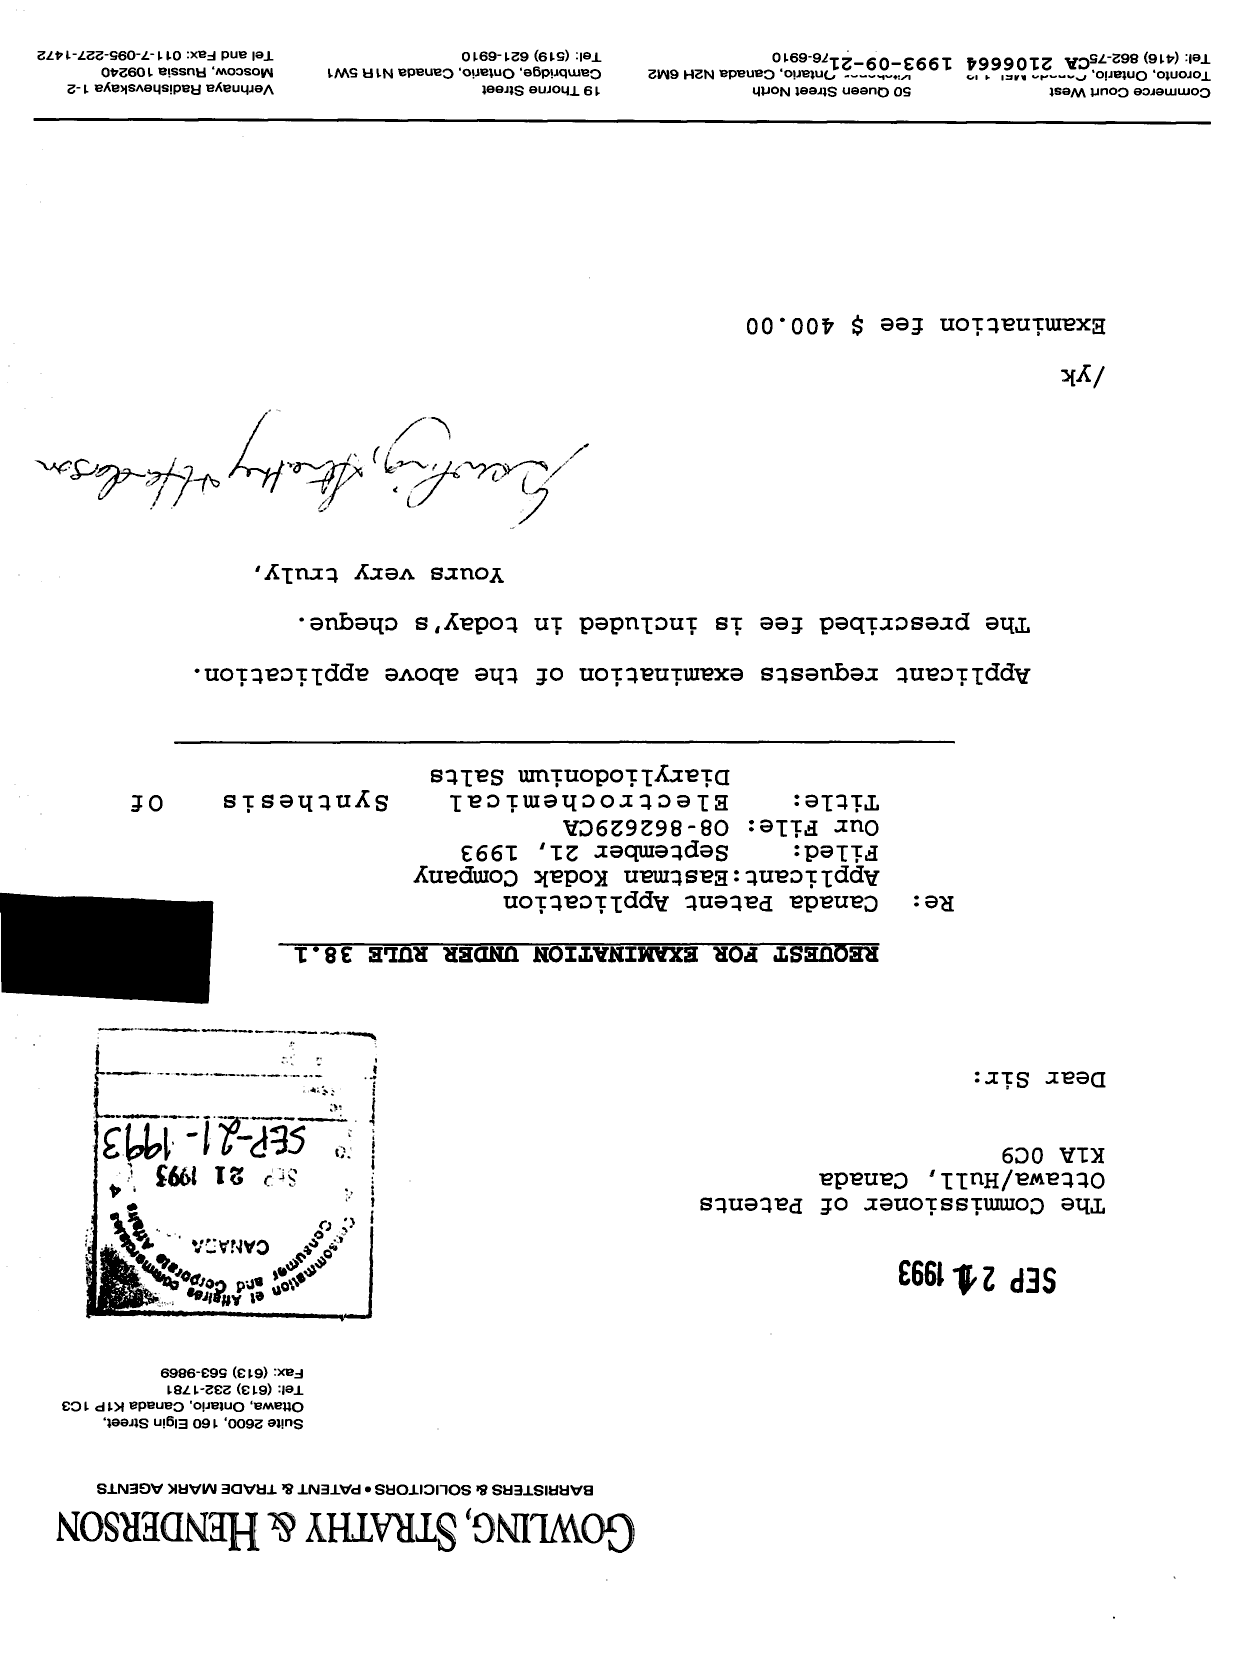 Canadian Patent Document 2106664. Prosecution Correspondence 19930921. Image 1 of 1